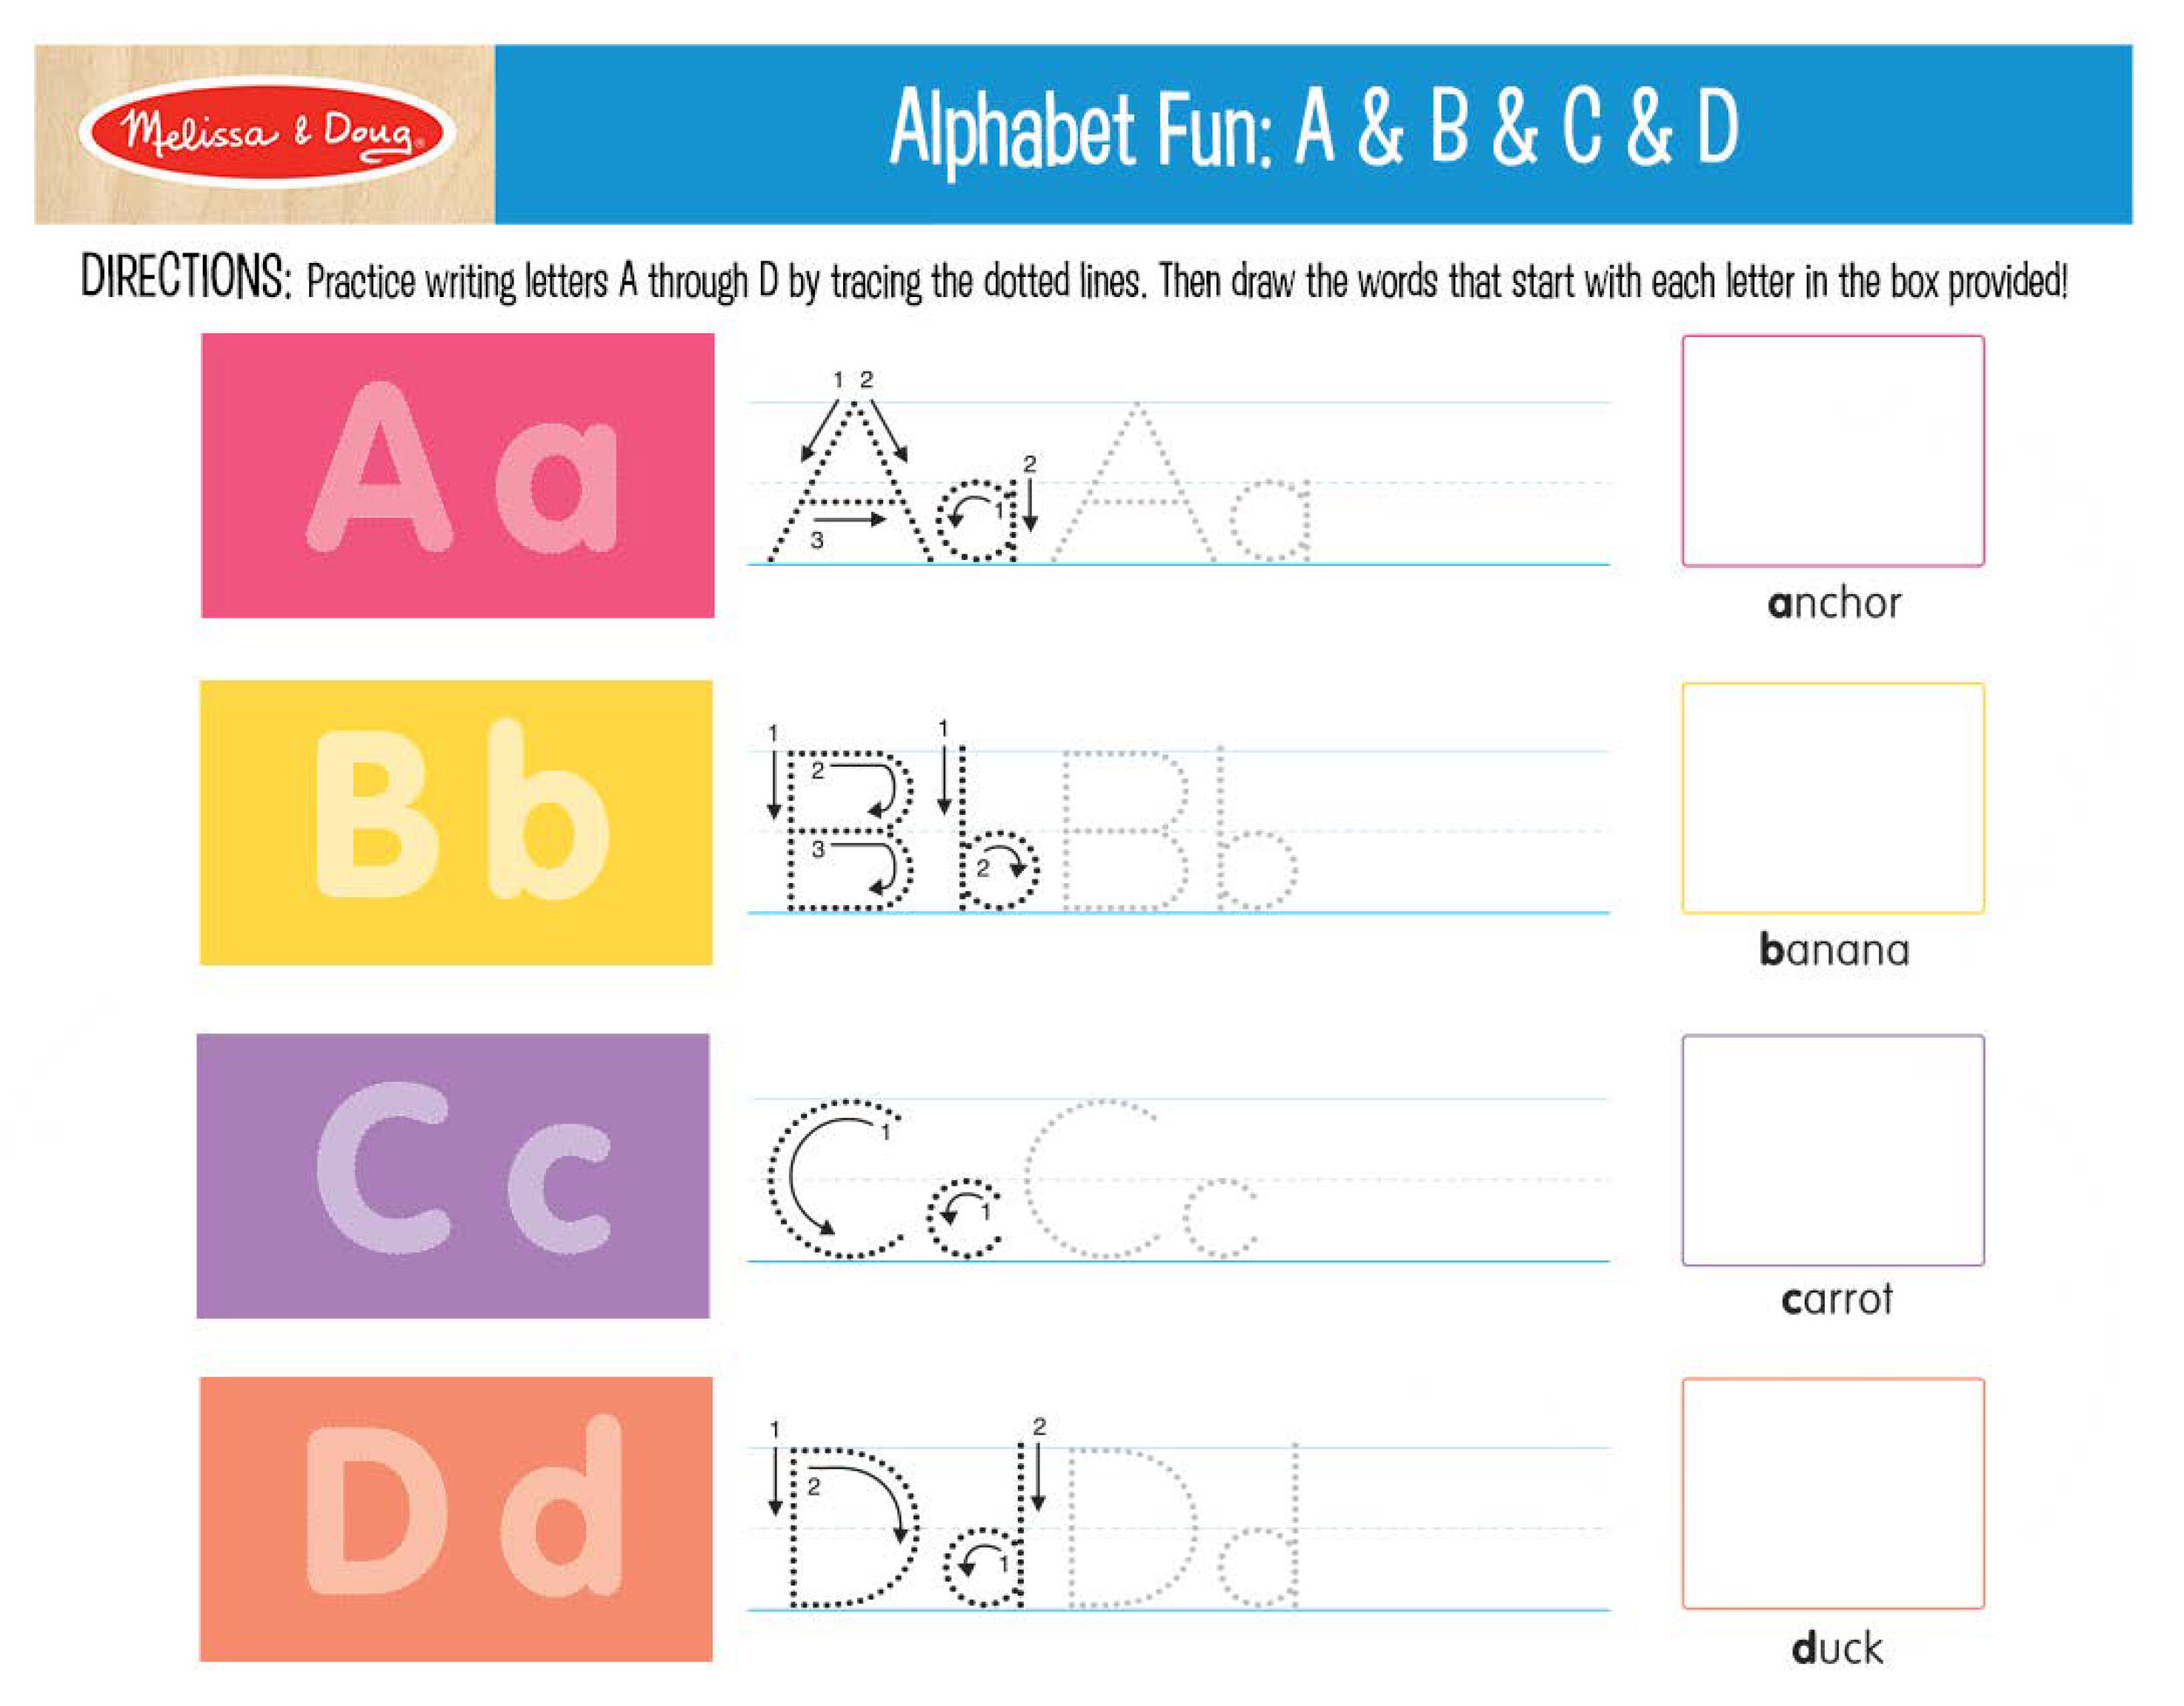 Printable_AlphabetFun-ABCD.jpg